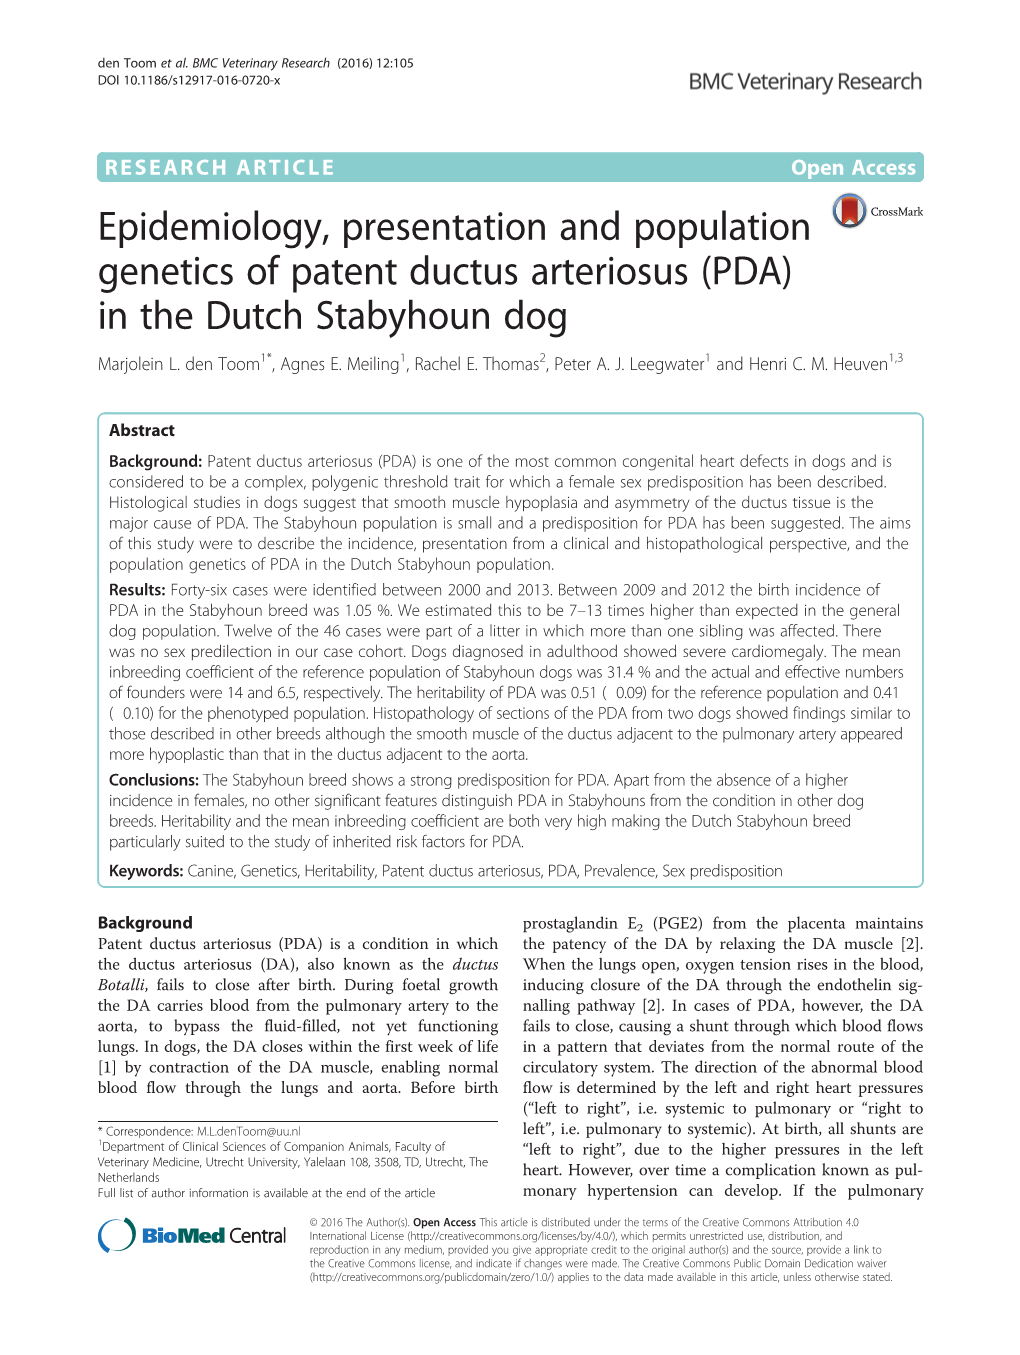 Epidemiology, Presentation and Population Genetics of Patent Ductus Arteriosus (PDA) in the Dutch Stabyhoun Dog Marjolein L